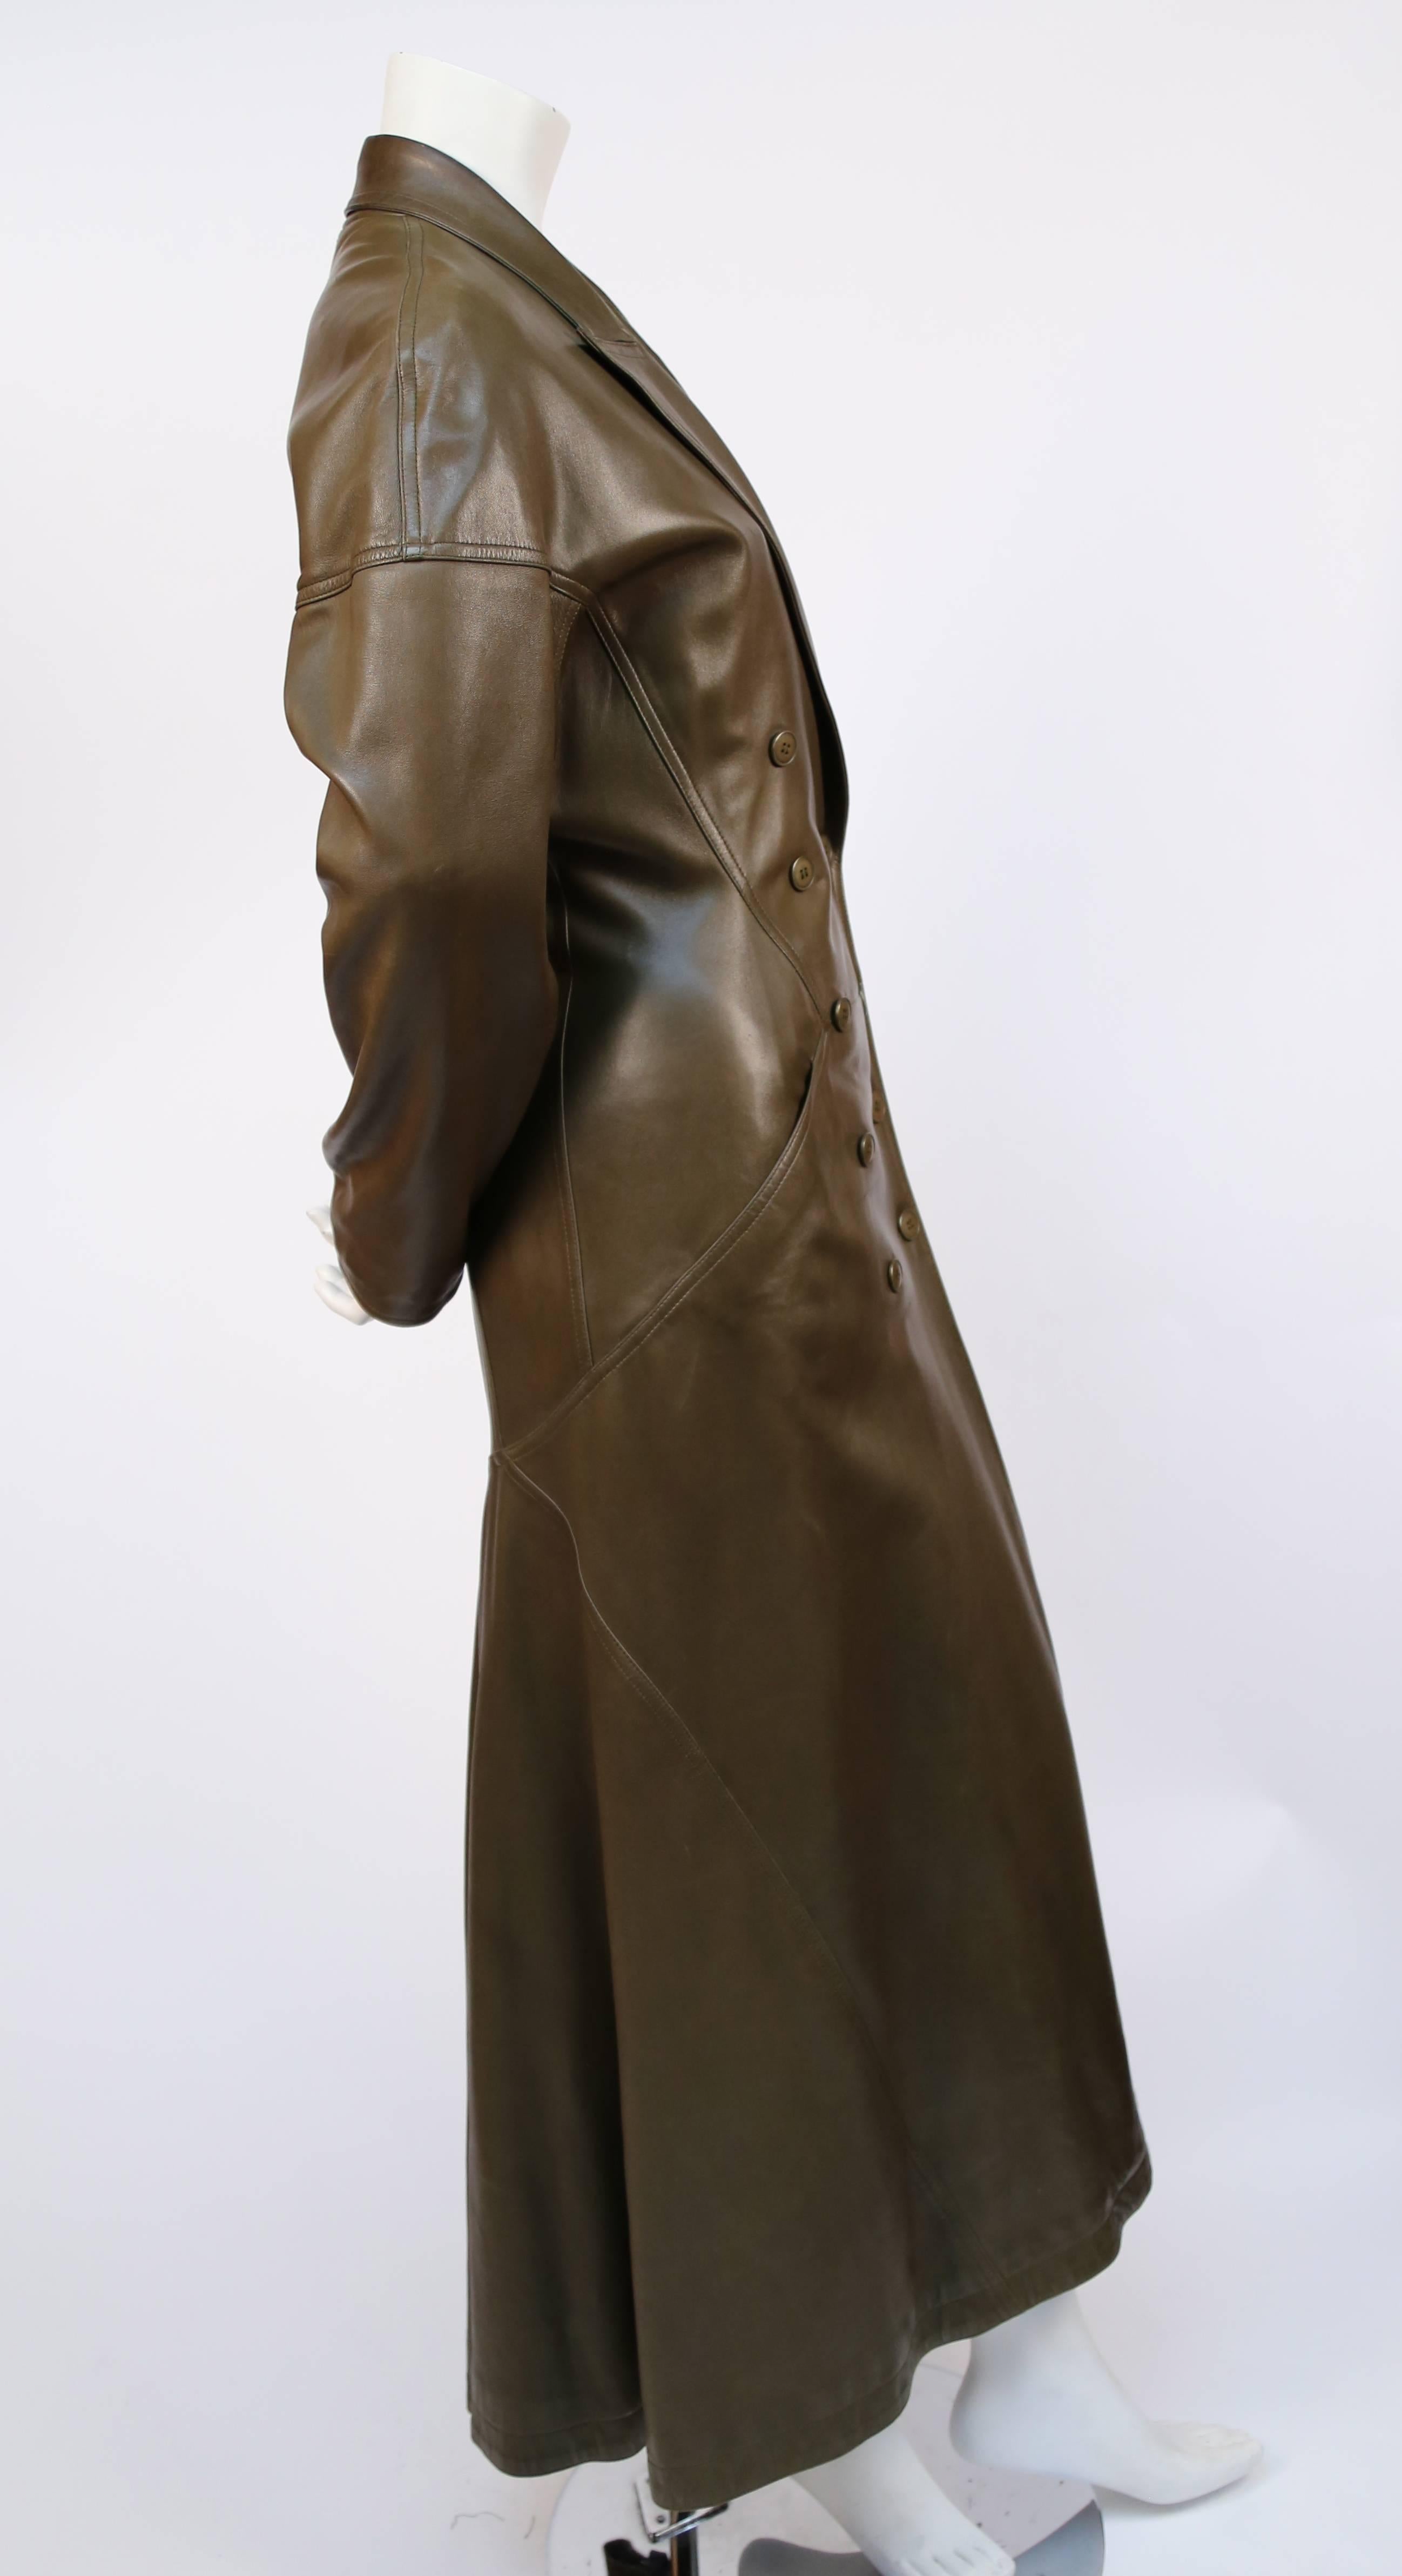 Alaia Leather Coat - For Sale on 1stDibs | alaia leather jacket 